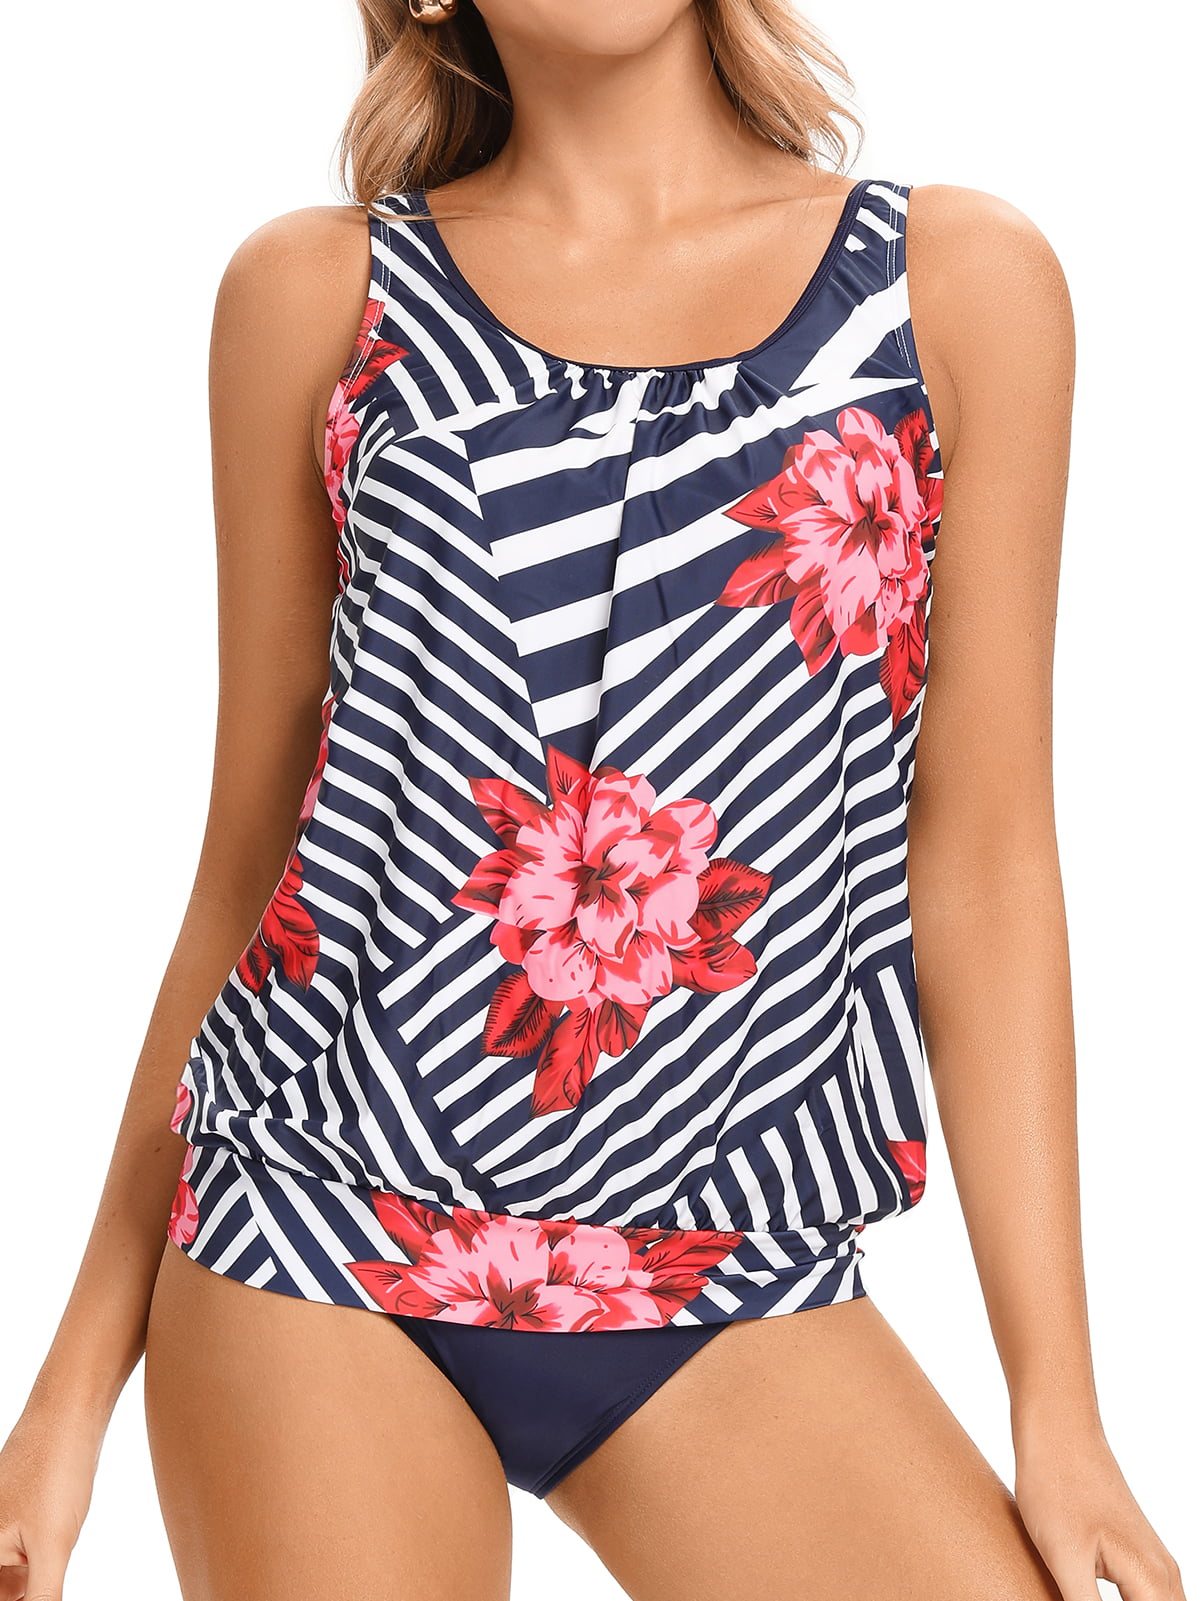 BIKINX Tankini Swimsuits for Women Plus Size Swimwear Tummy Control Two Piece Bathing Suits 